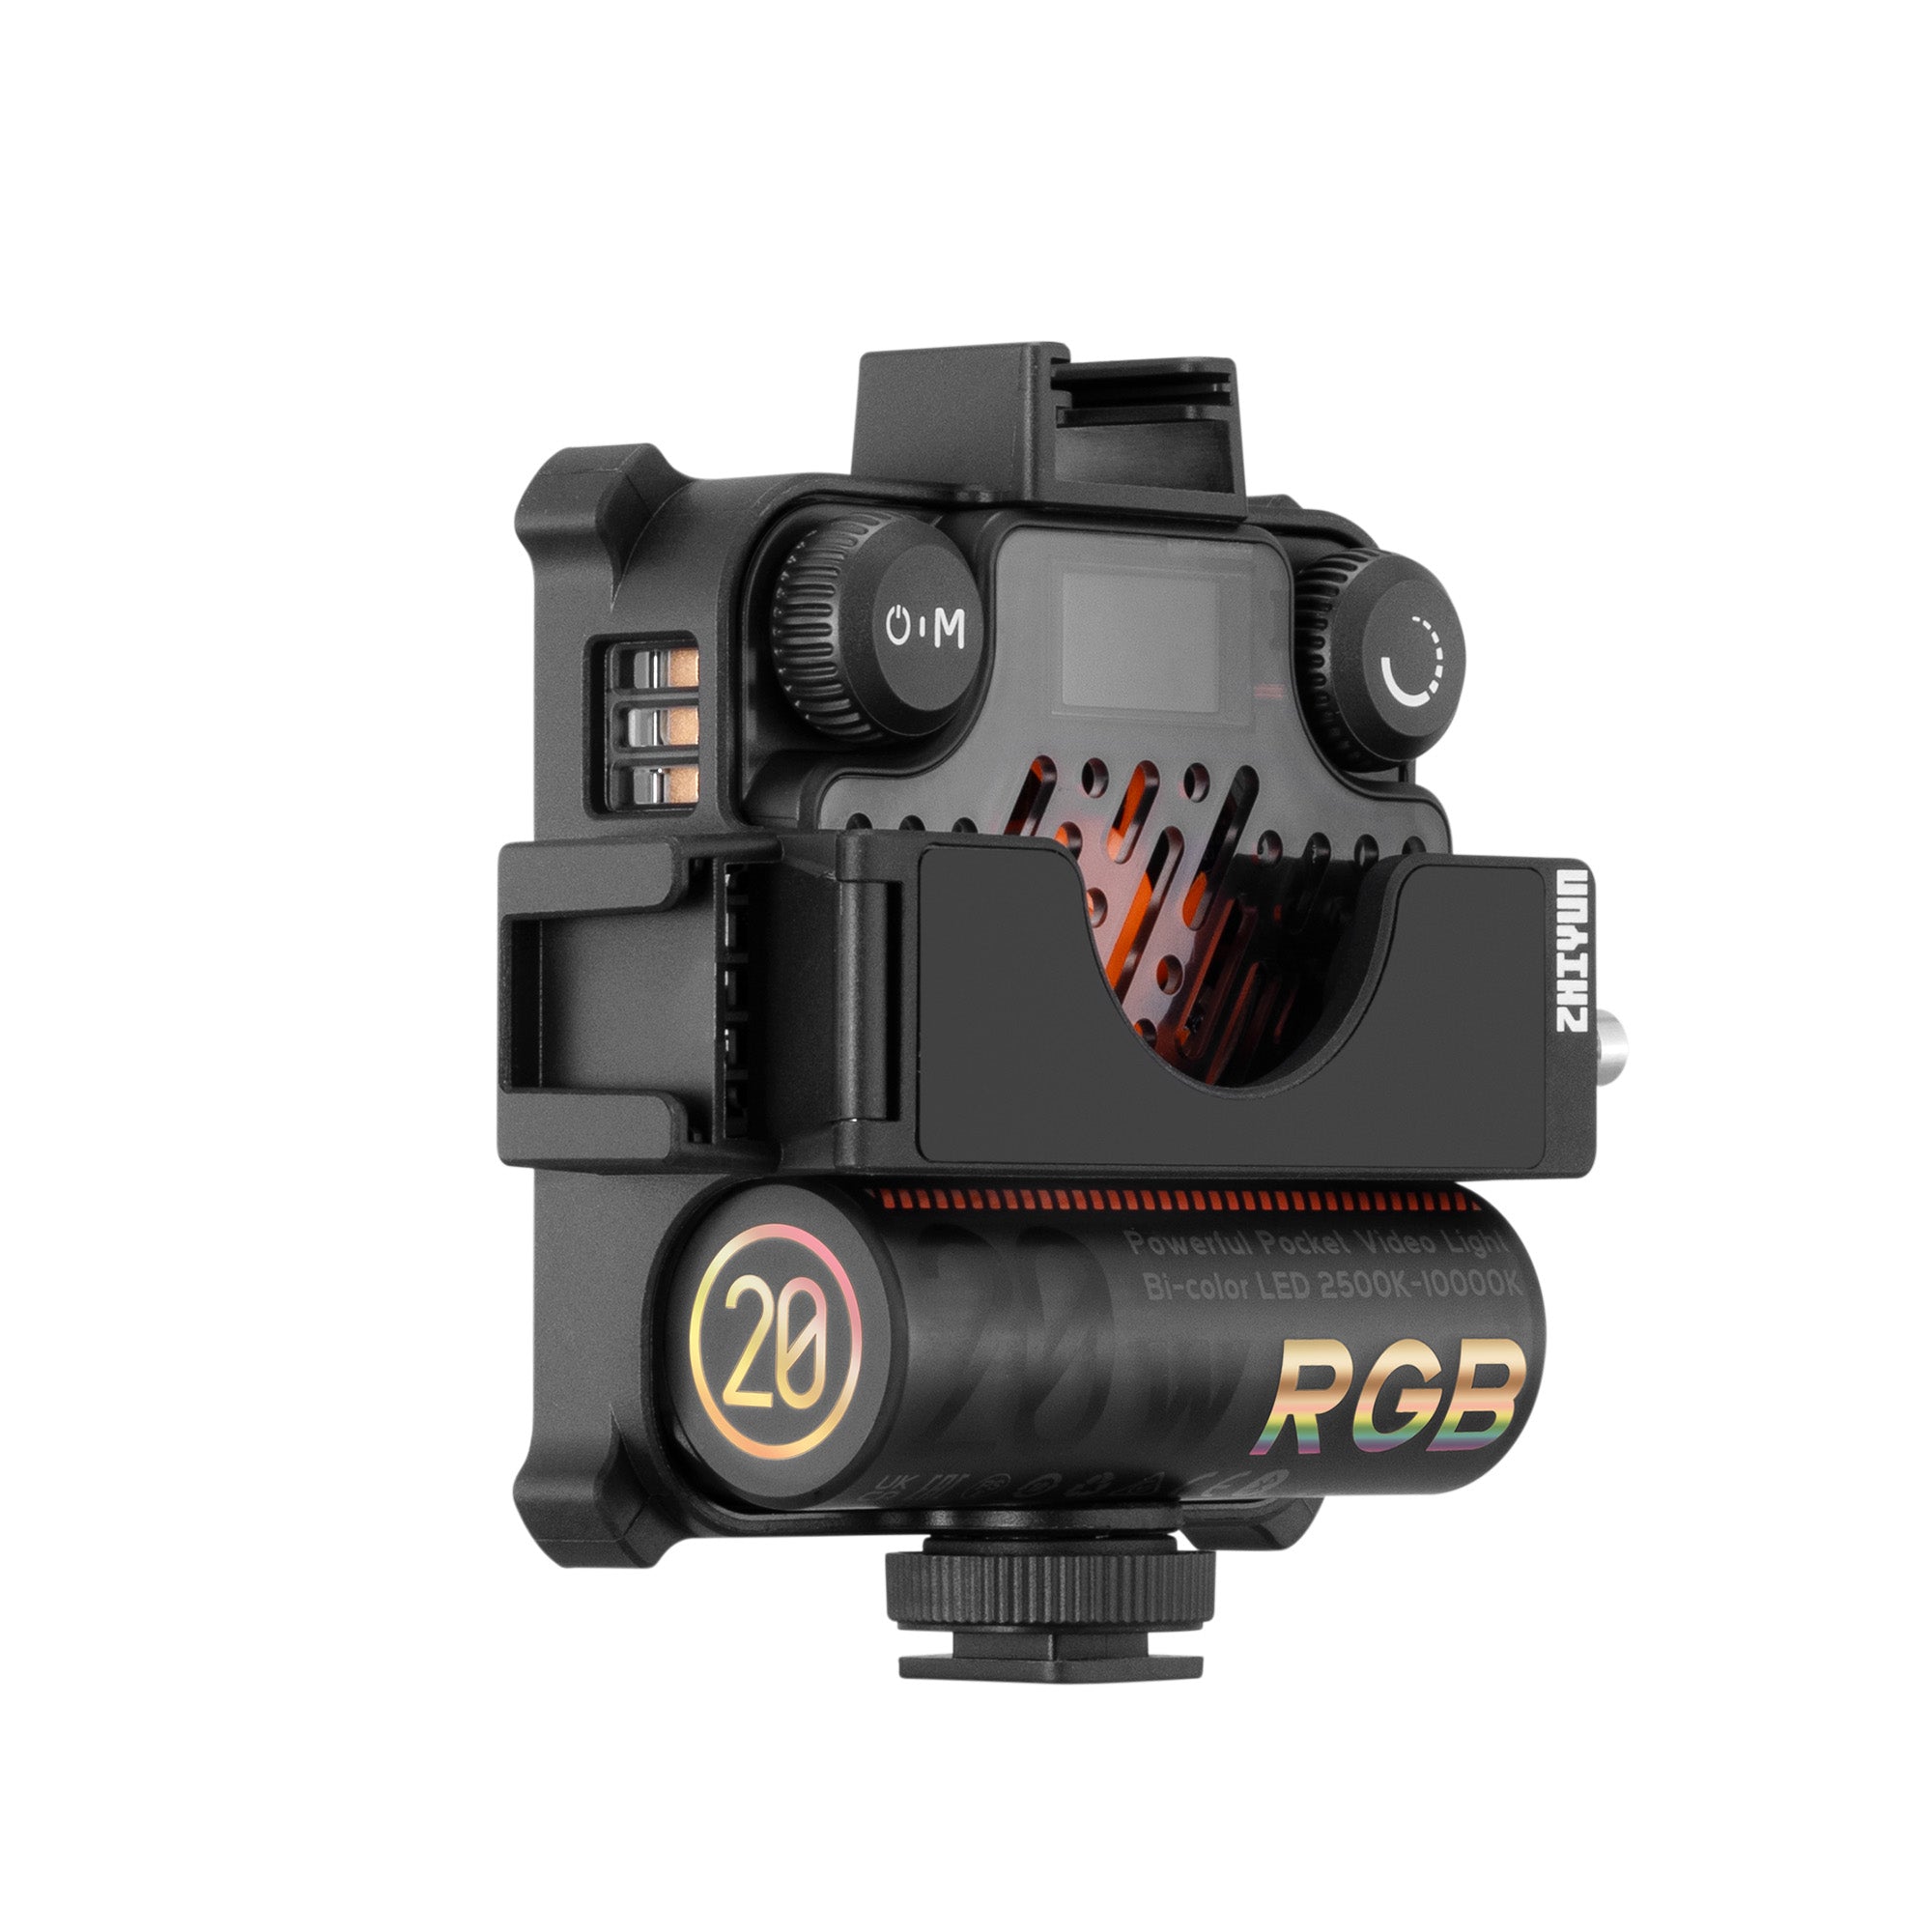 ZHIYUN FIVERAY M20C RGB Video Light 20W Portable Camera Light Support